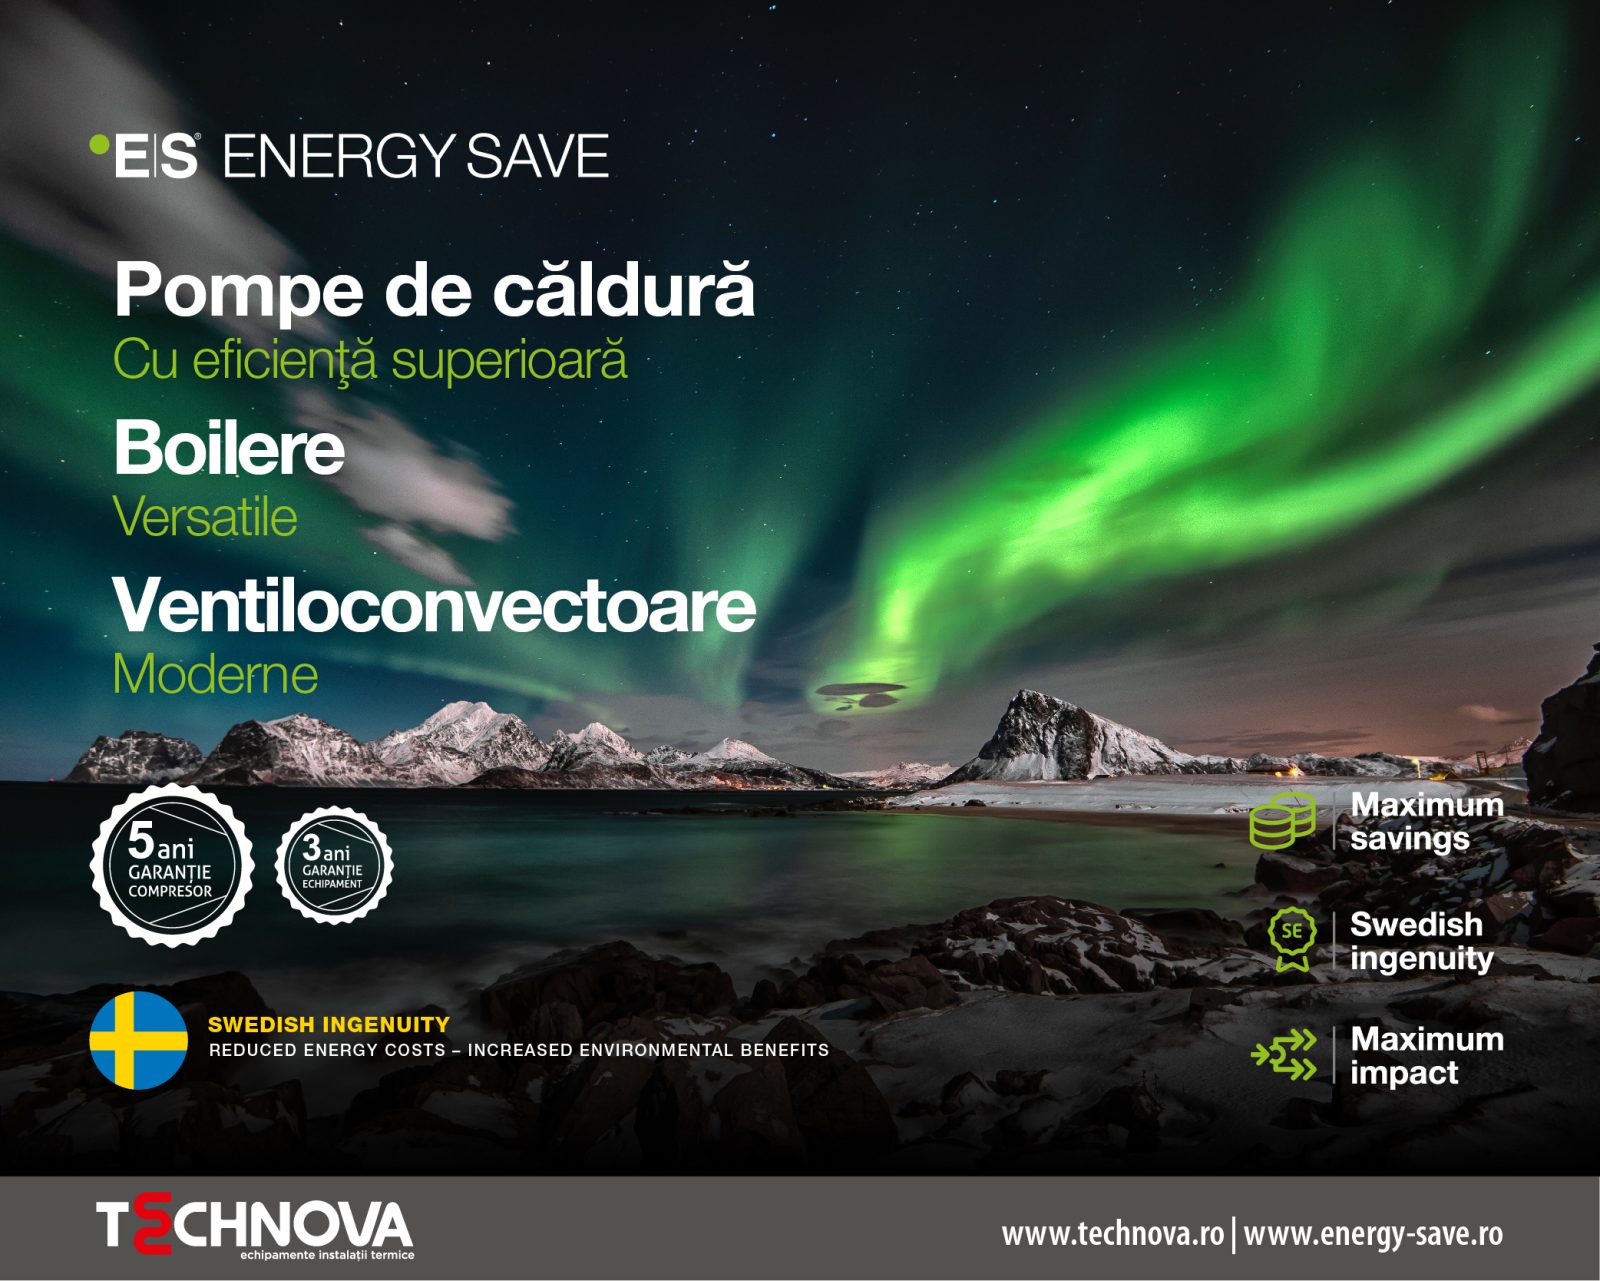 Energy Save - pompe de caldura boilereventiloconvectoare - technova